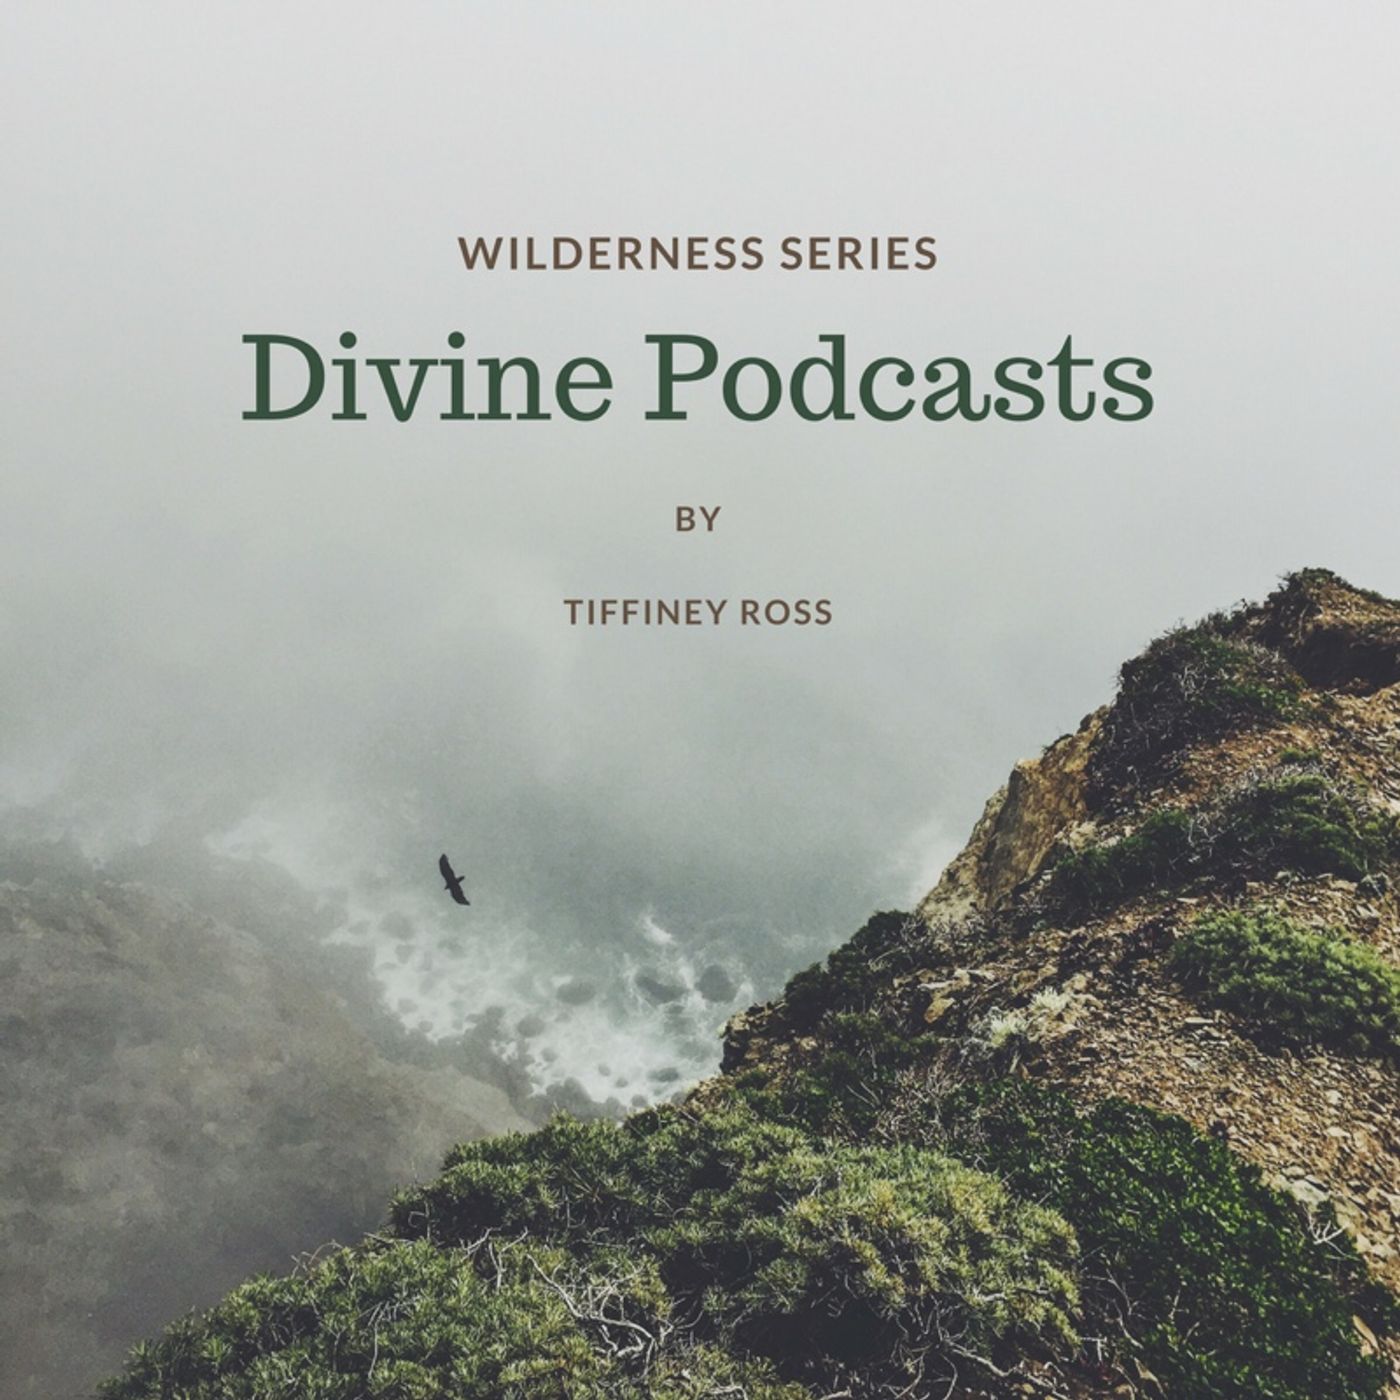 Episode 4 - Divine Podcasts